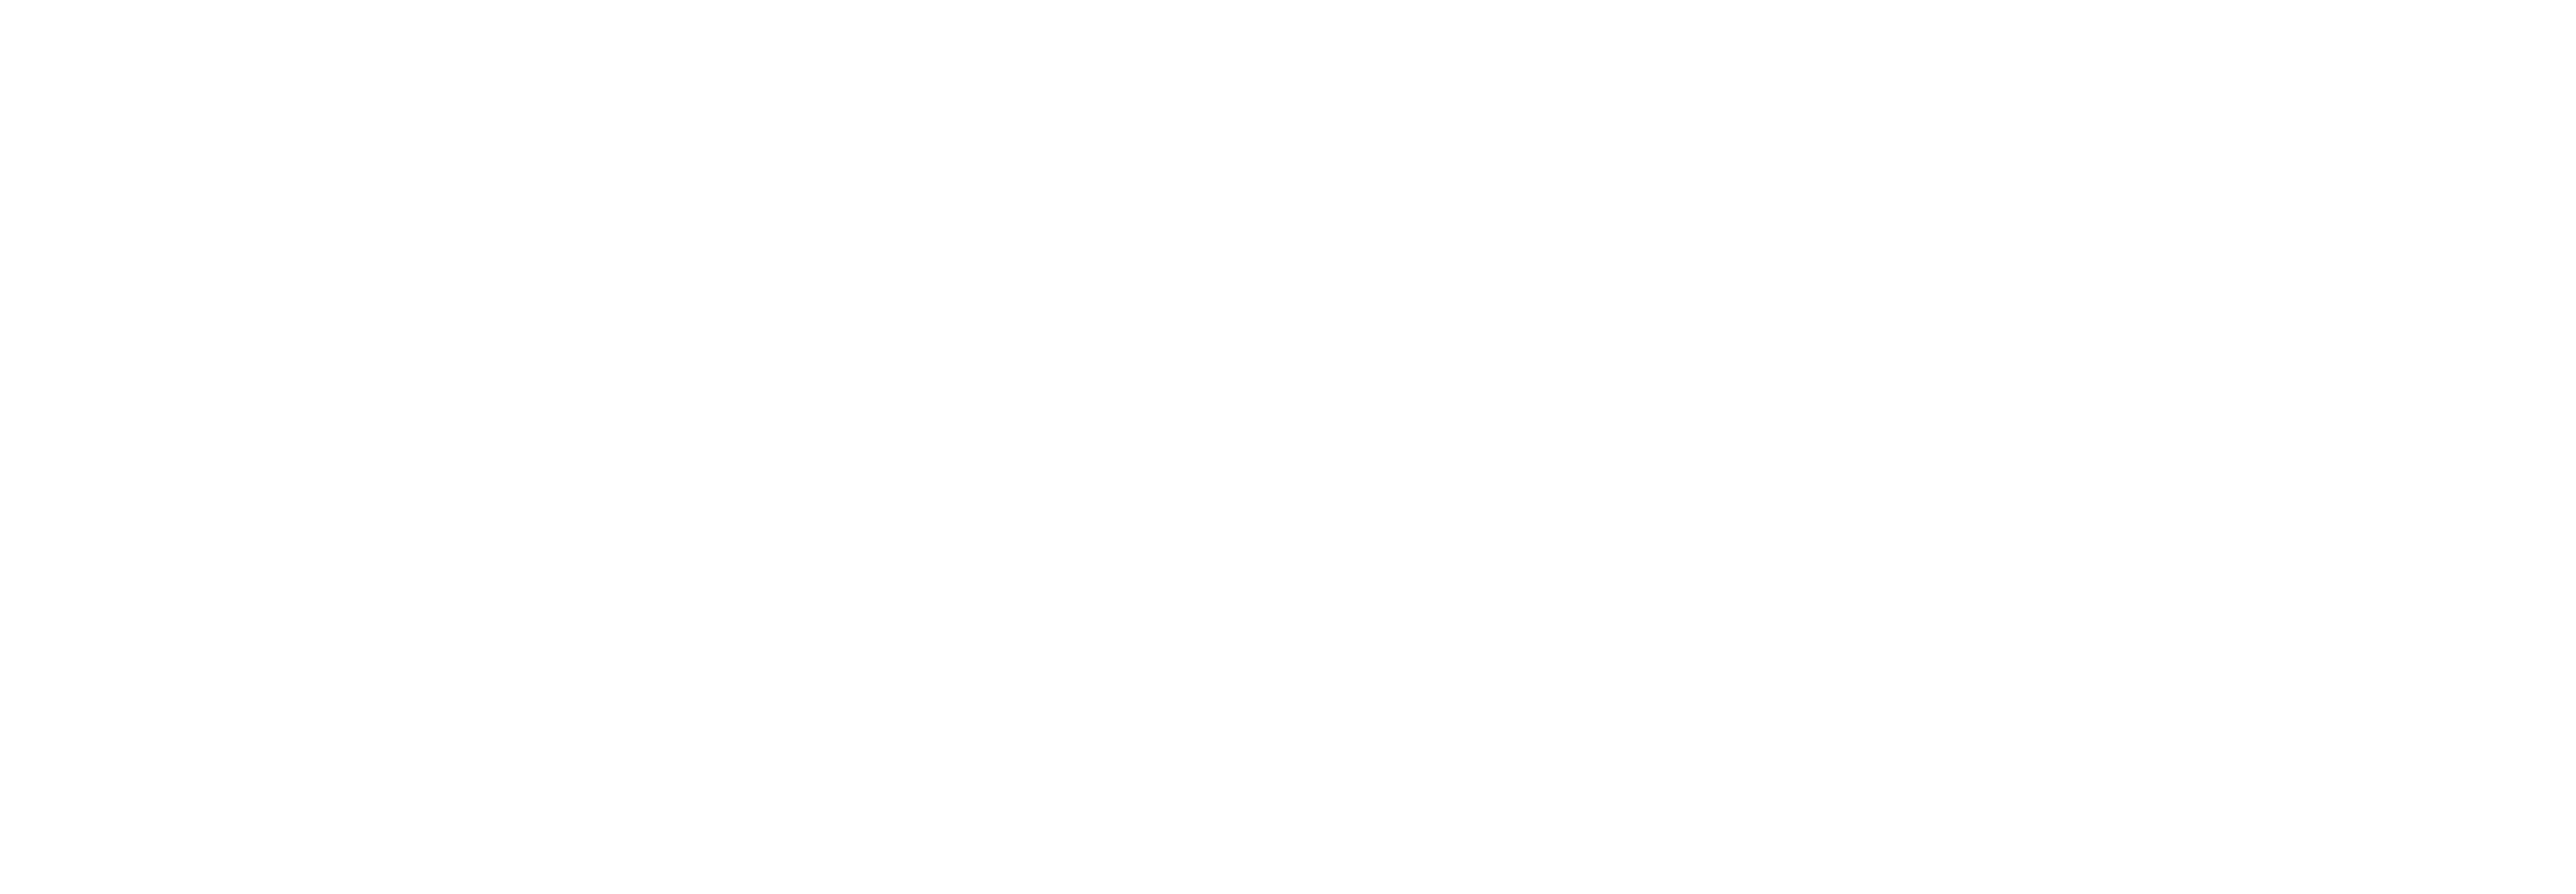 GWN PHMA Logo - Asset 15@2x2